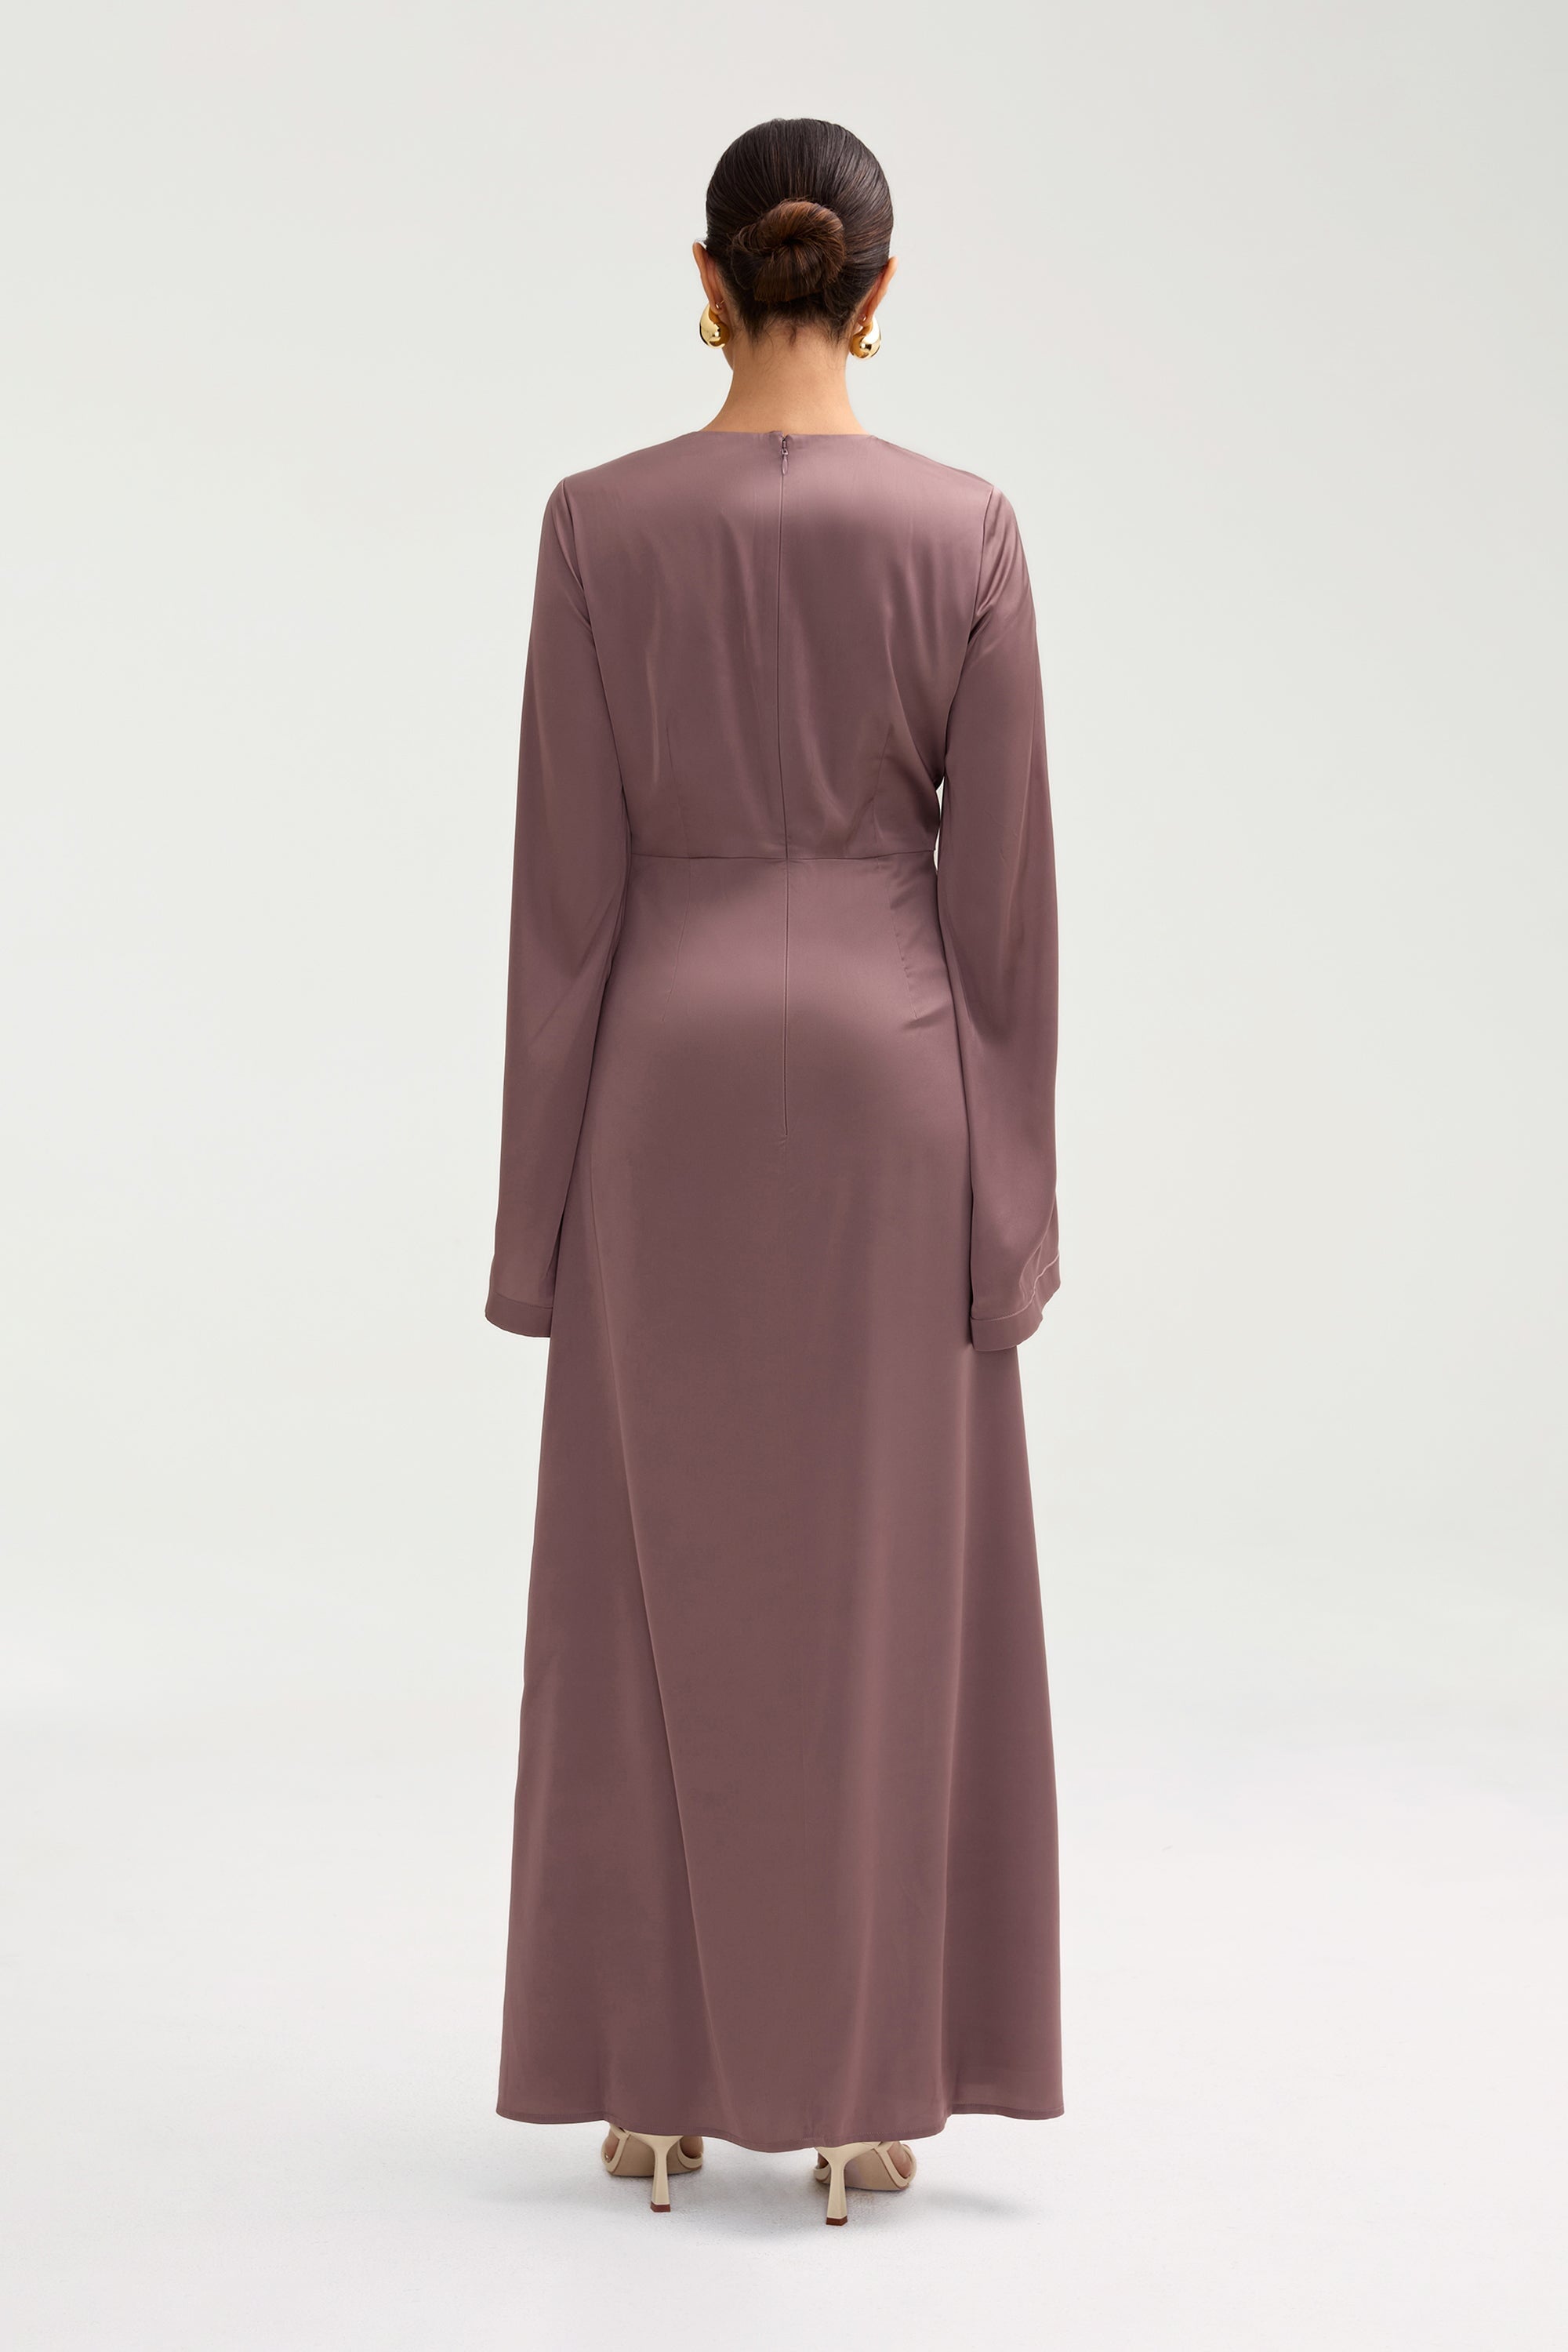 Duha Satin Twist Front Maxi Dress - Deep Taupe Clothing epschoolboard 